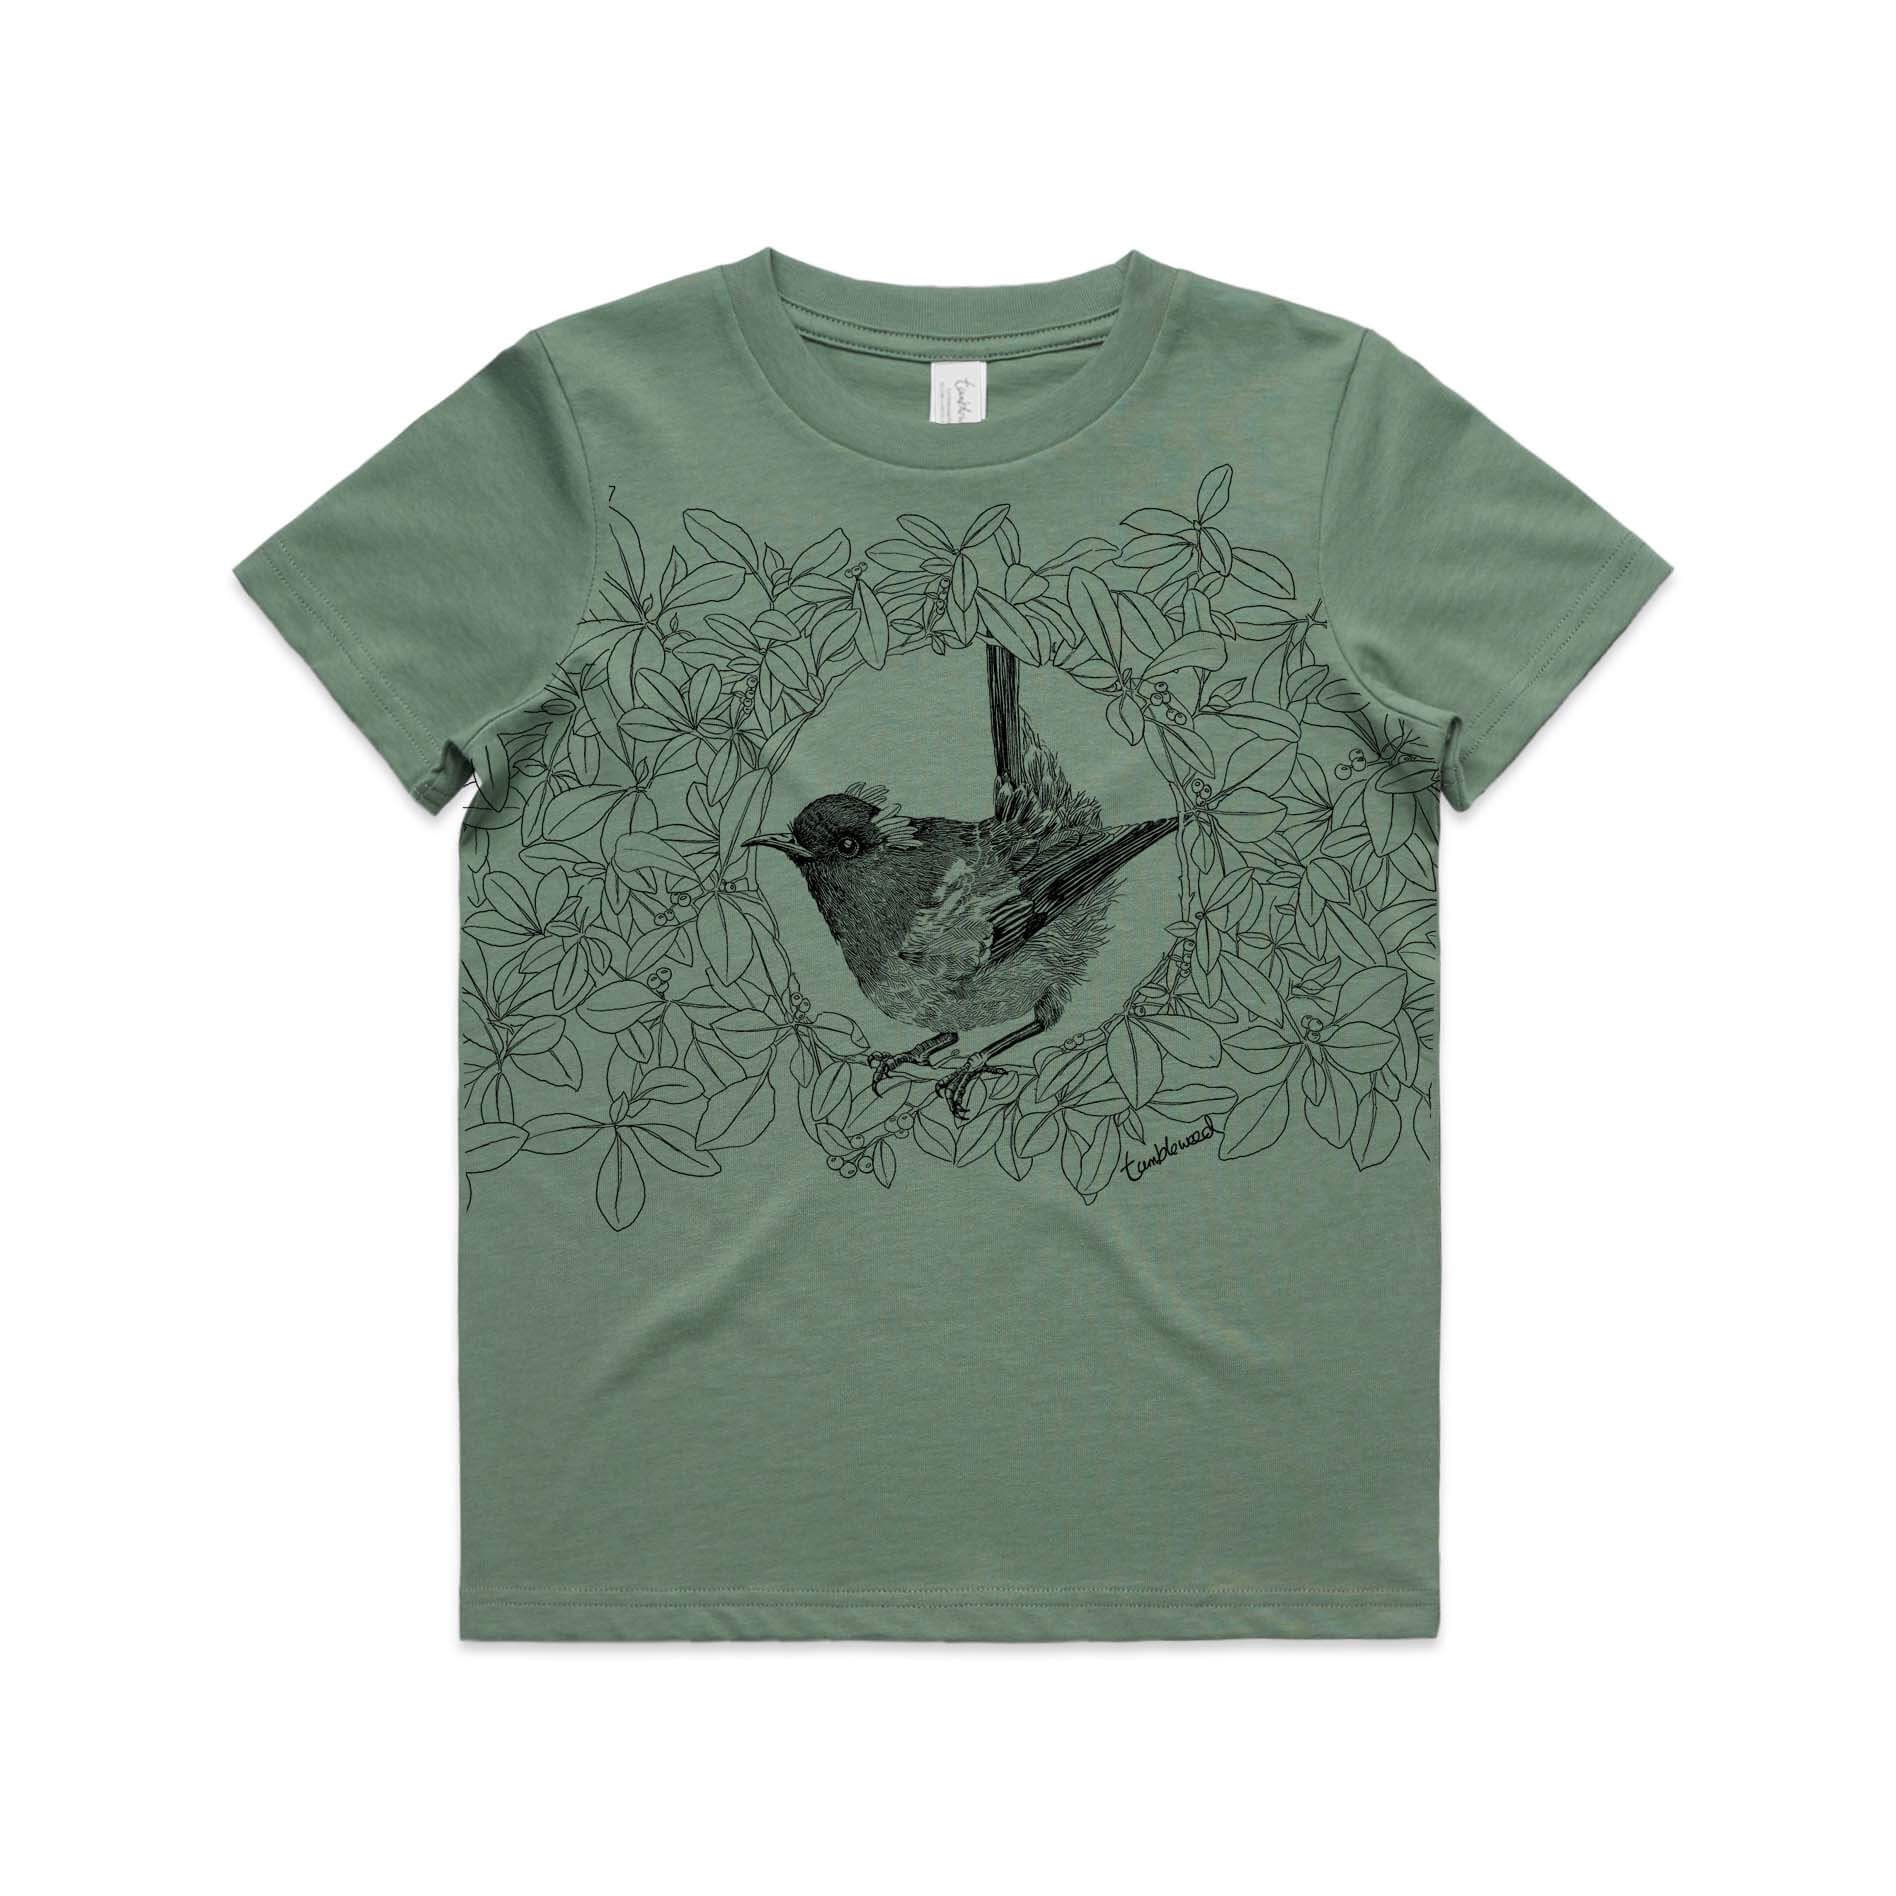 Sage, cotton kids' t-shirt with screen printed Kids hihi/stitchbird design.